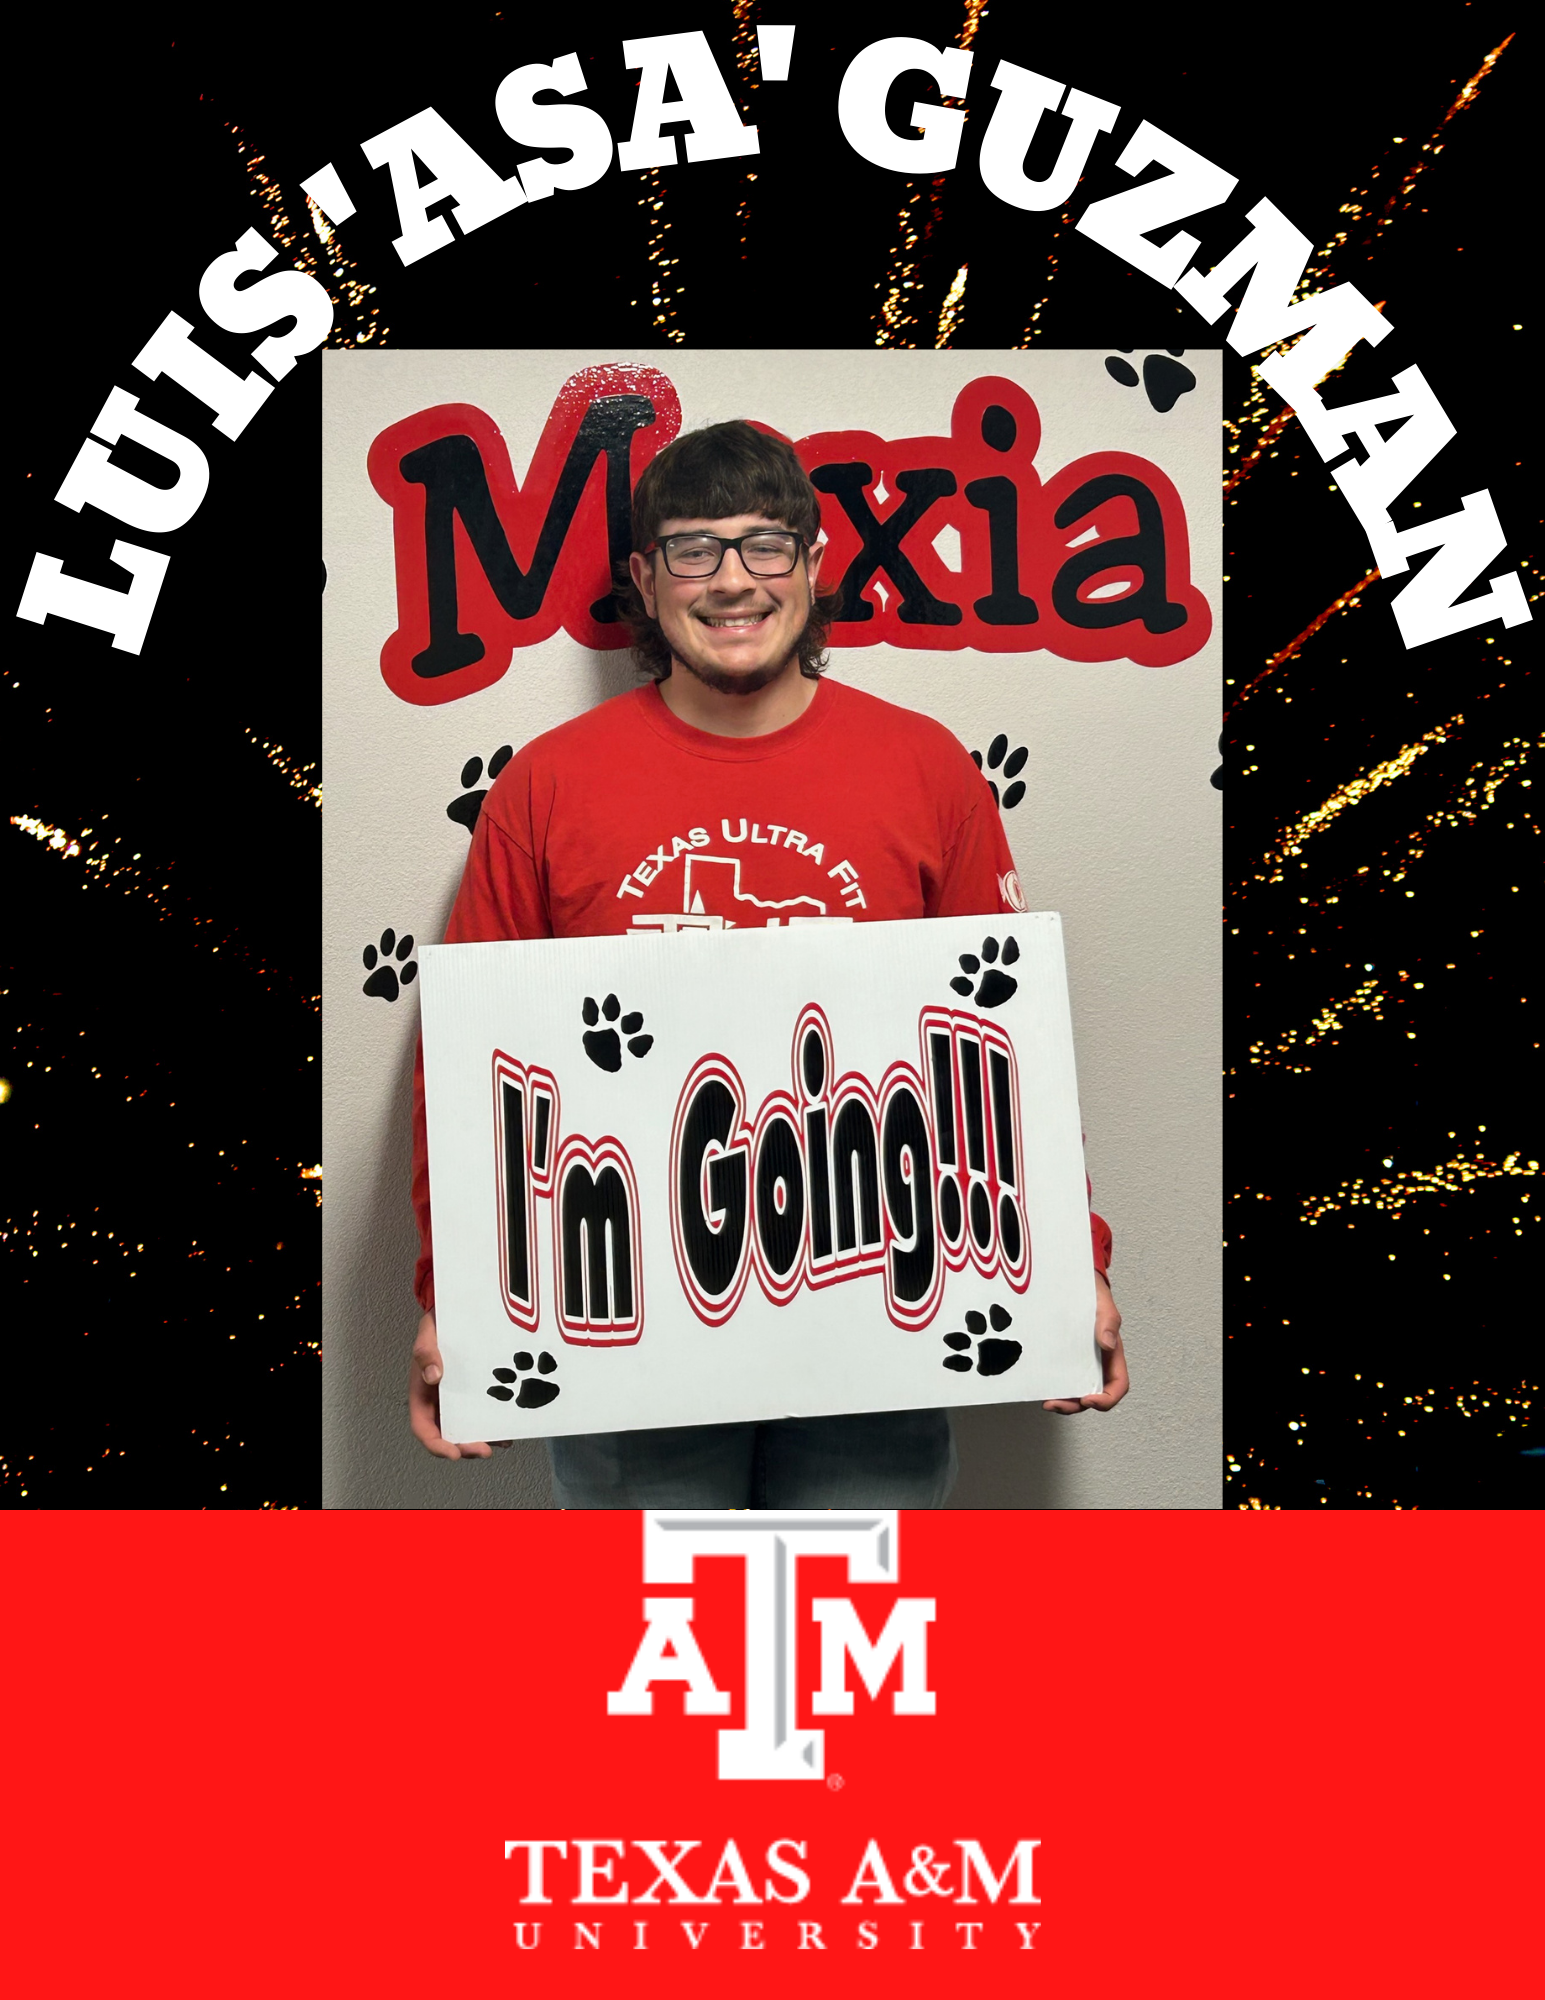 Luis 'Asa' Guzman - I'm Going! - Texas A&M University